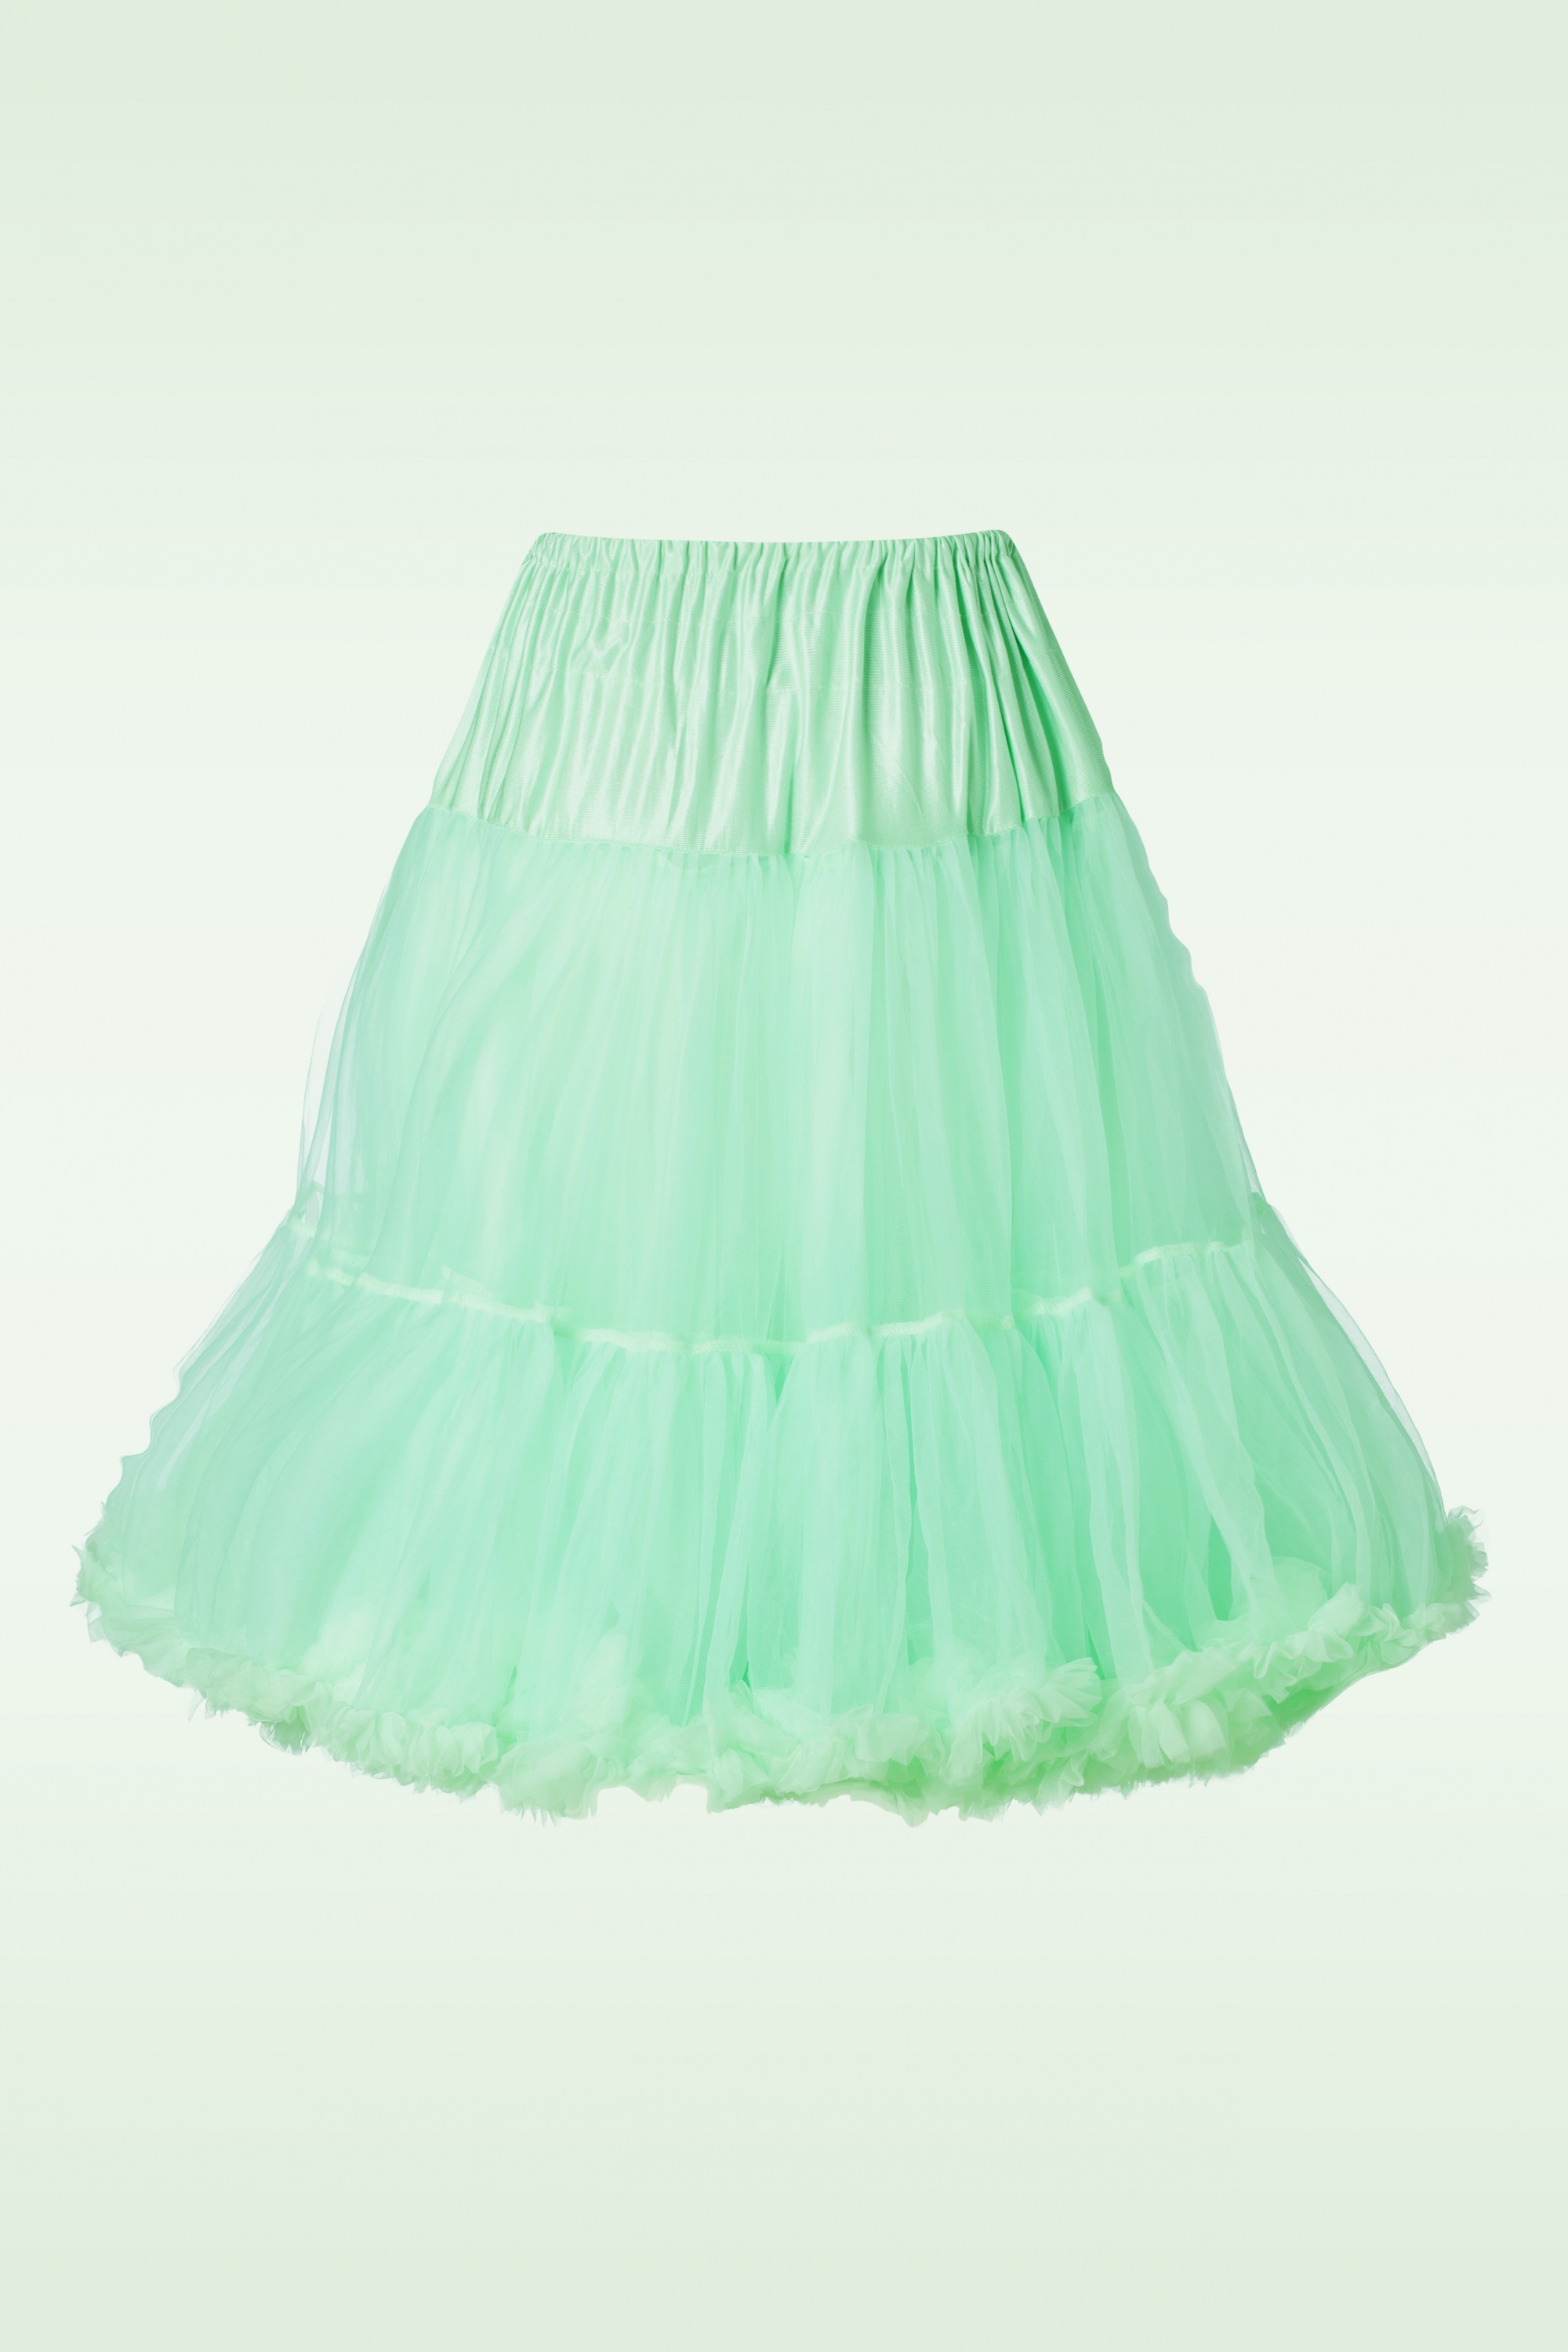 Banned Retro - Lola Lifeforms Petticoat in mintgroen 2